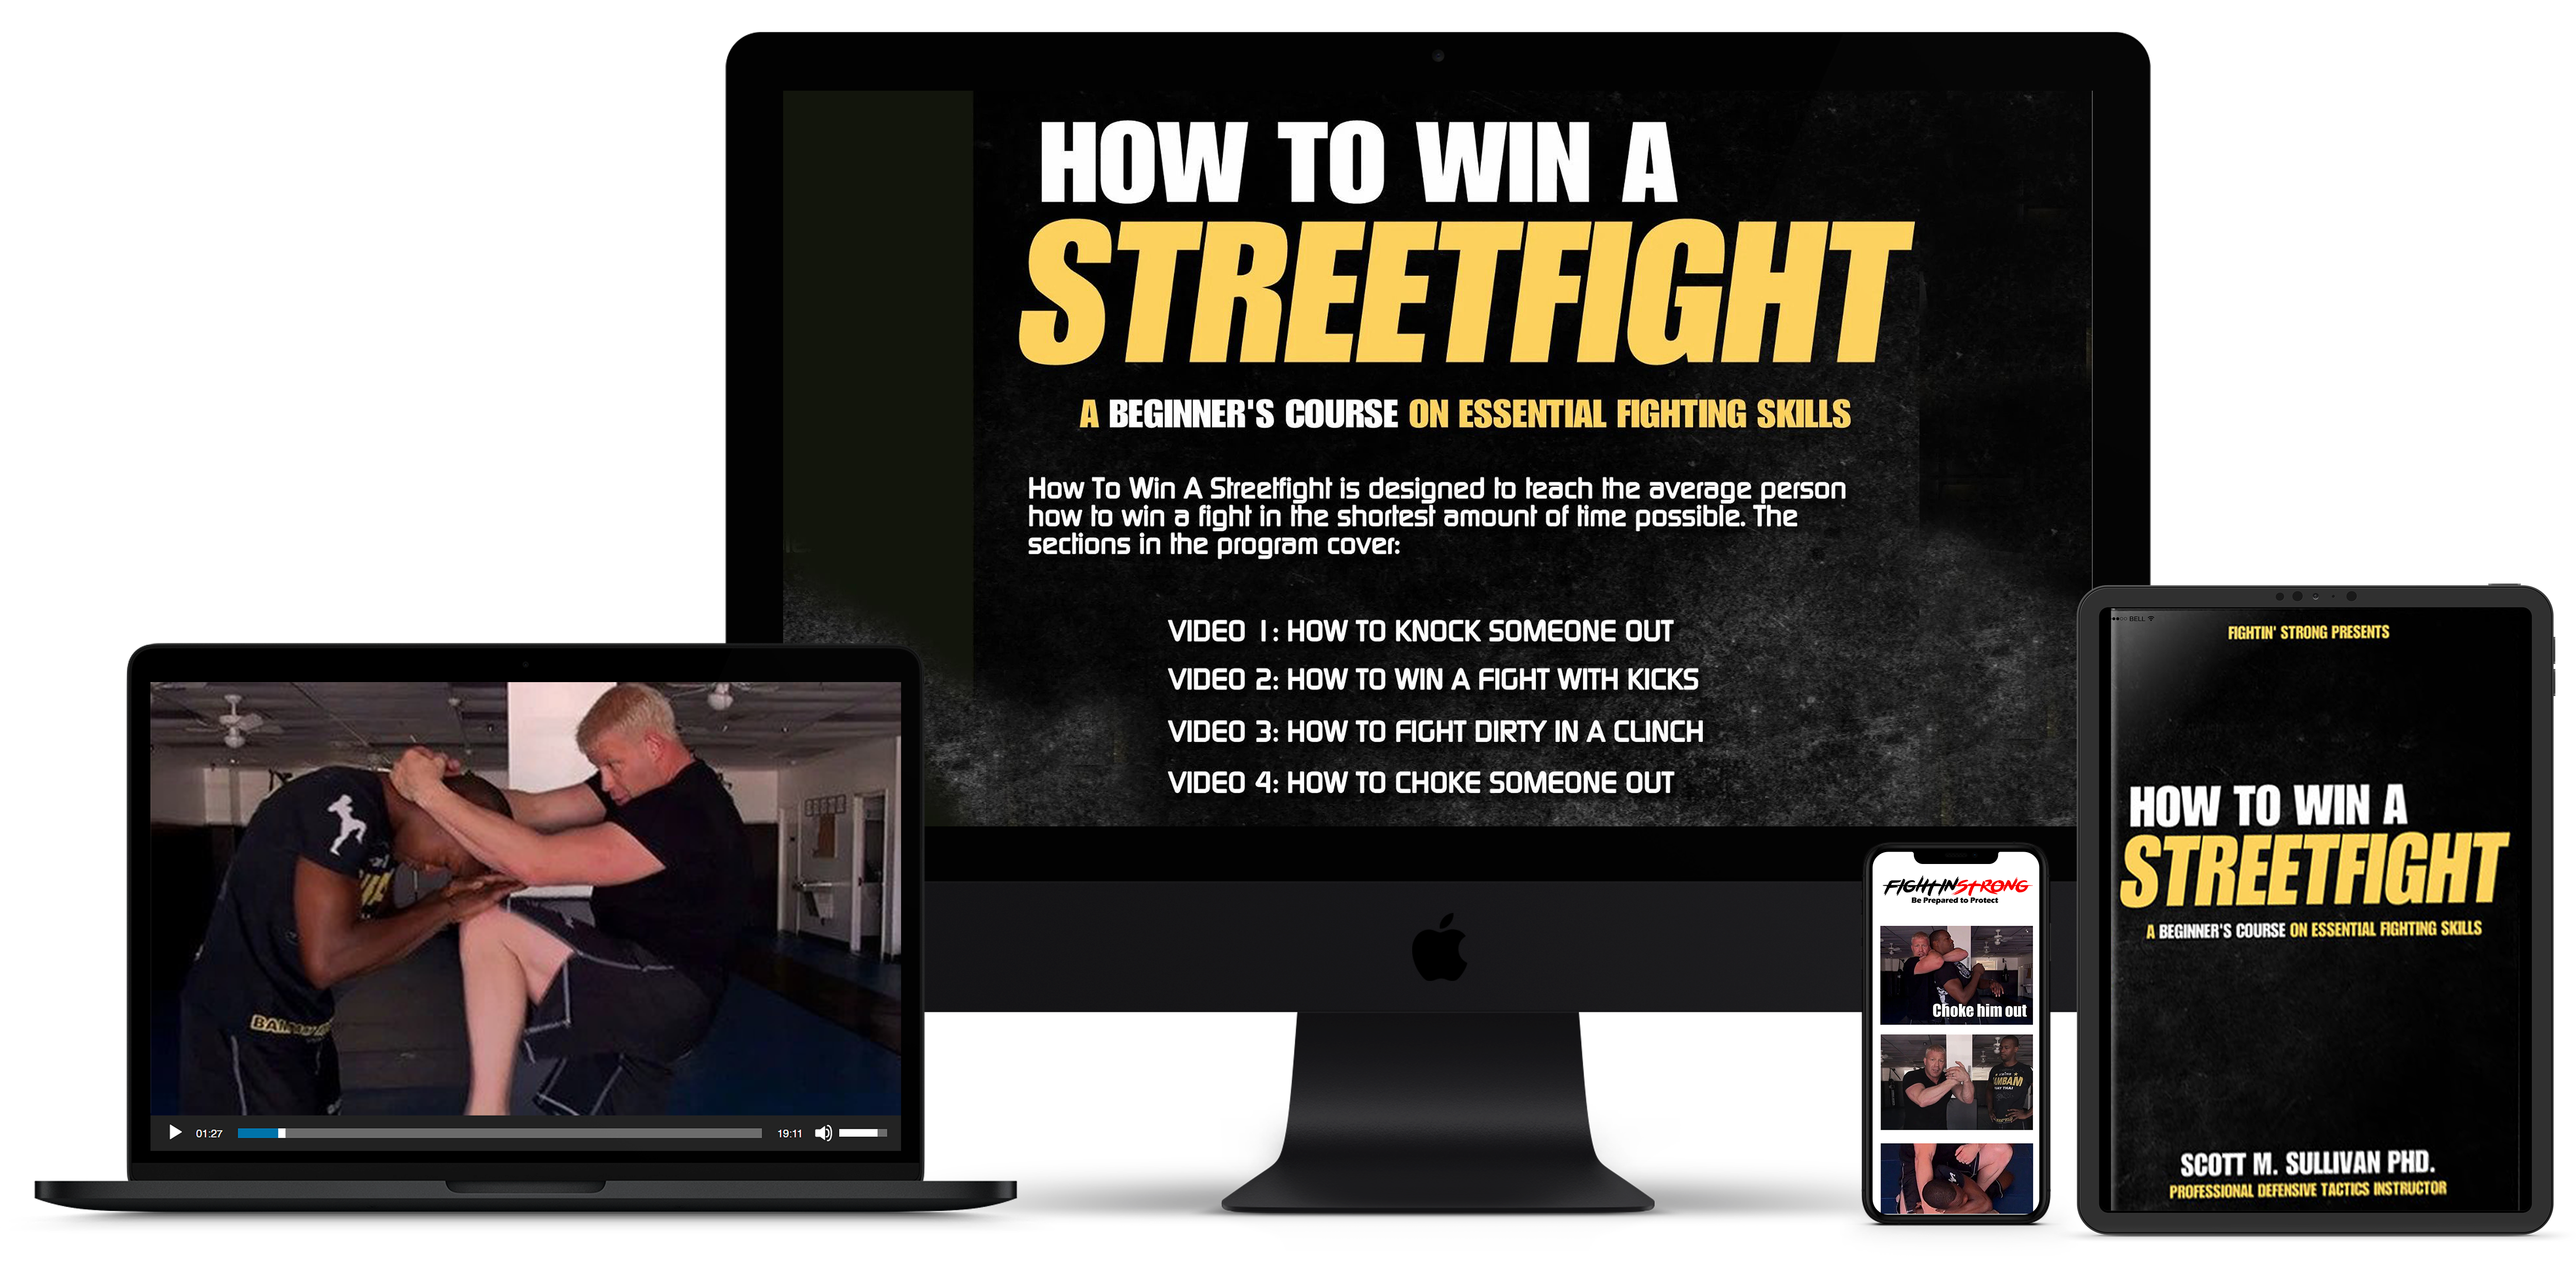 Scott 'Bam Bam' Sullivan - How to Win a Streetfight